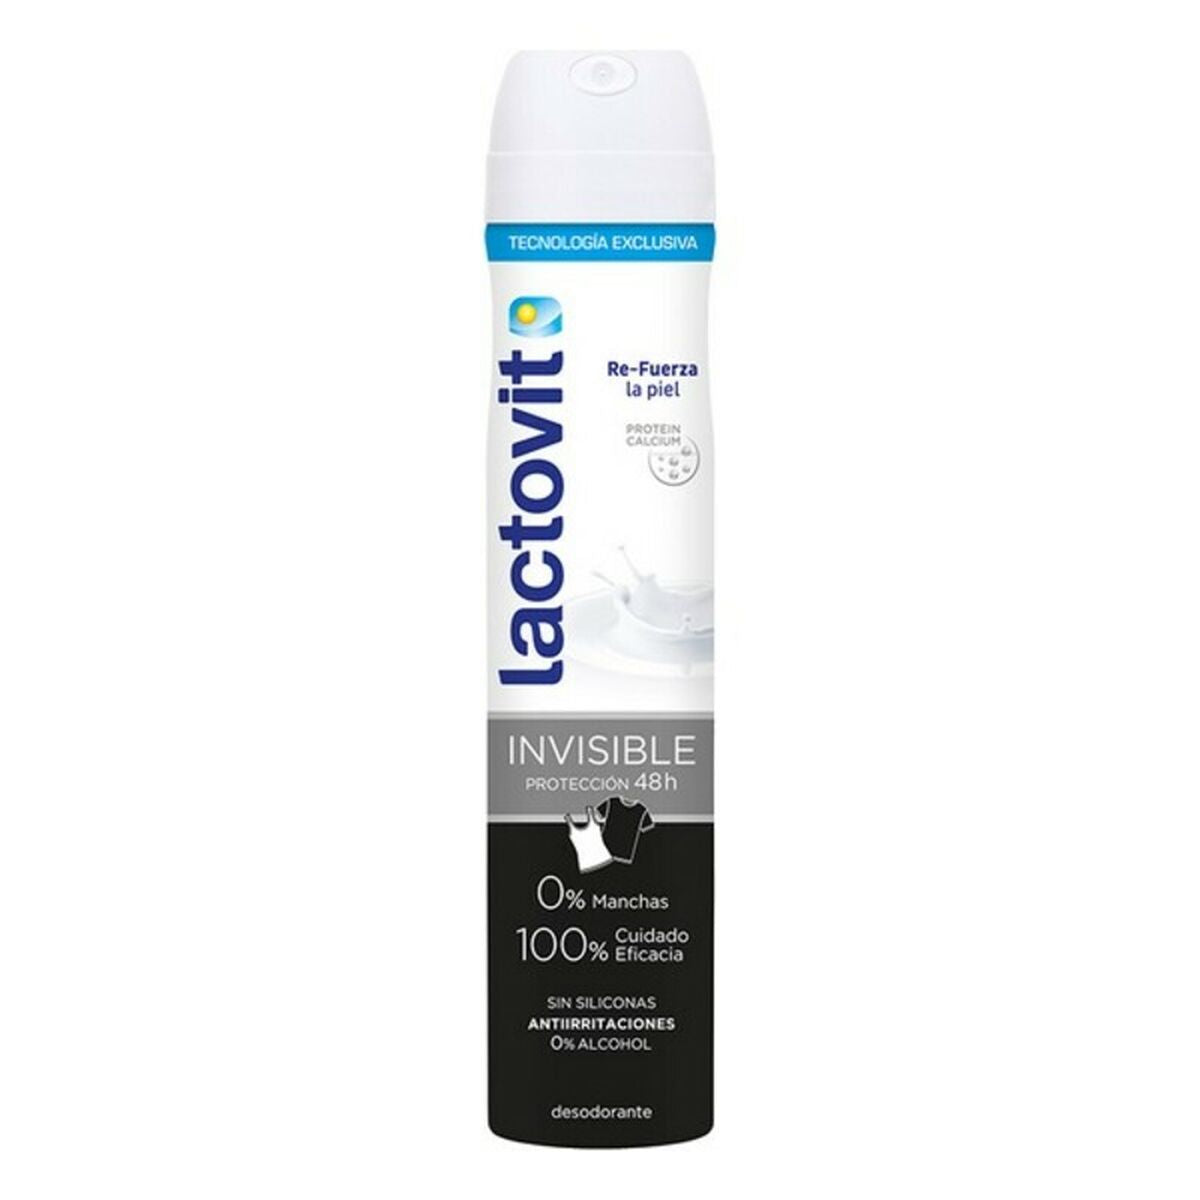 Spray déodorant invisible Antichanchas lactovit (200 ml)